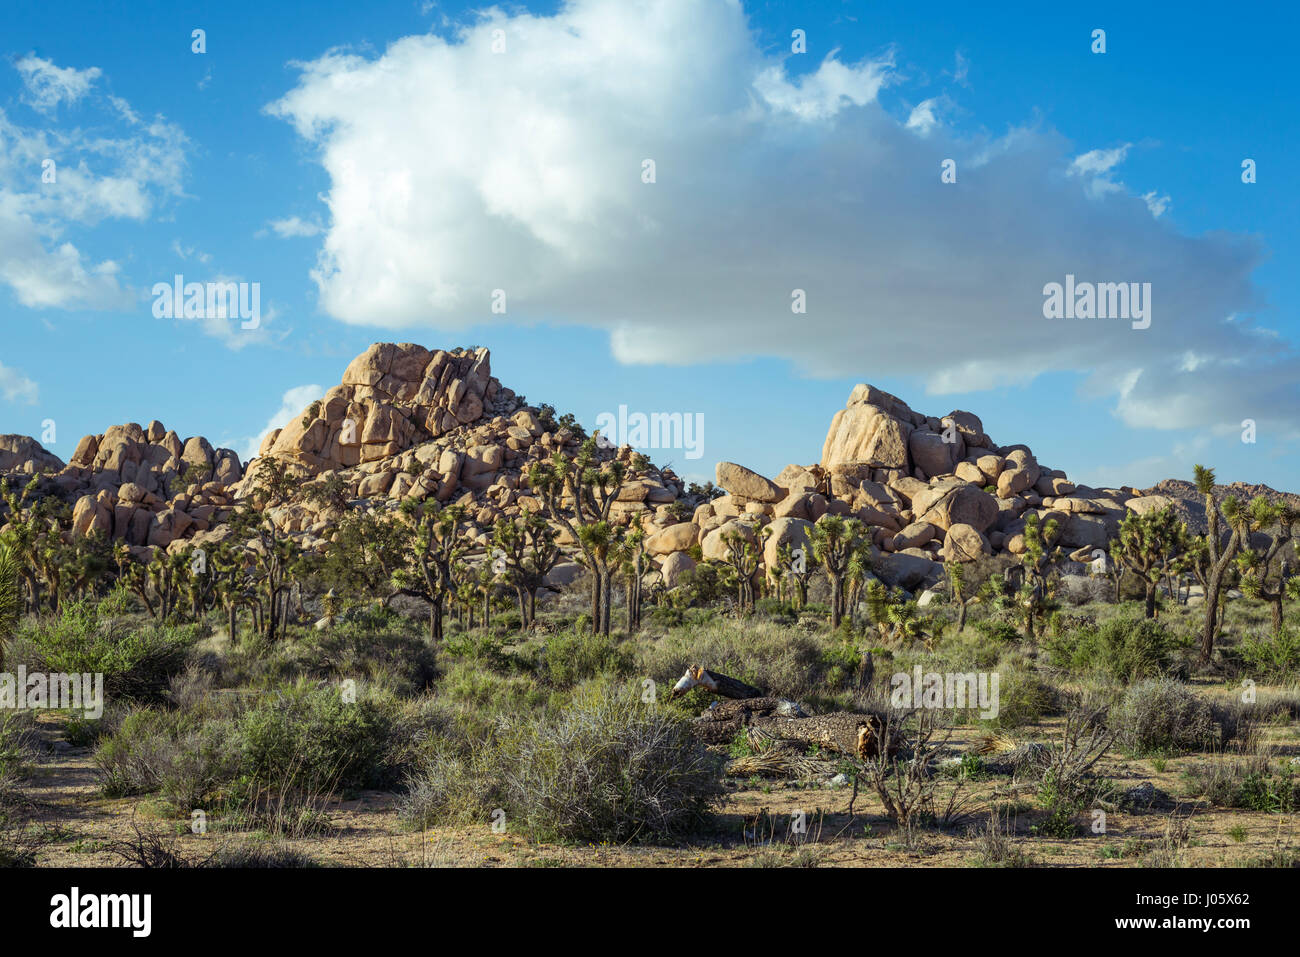 El paisaje desierto, el Parque Nacional Joshua Tree, California, USA. Foto de stock